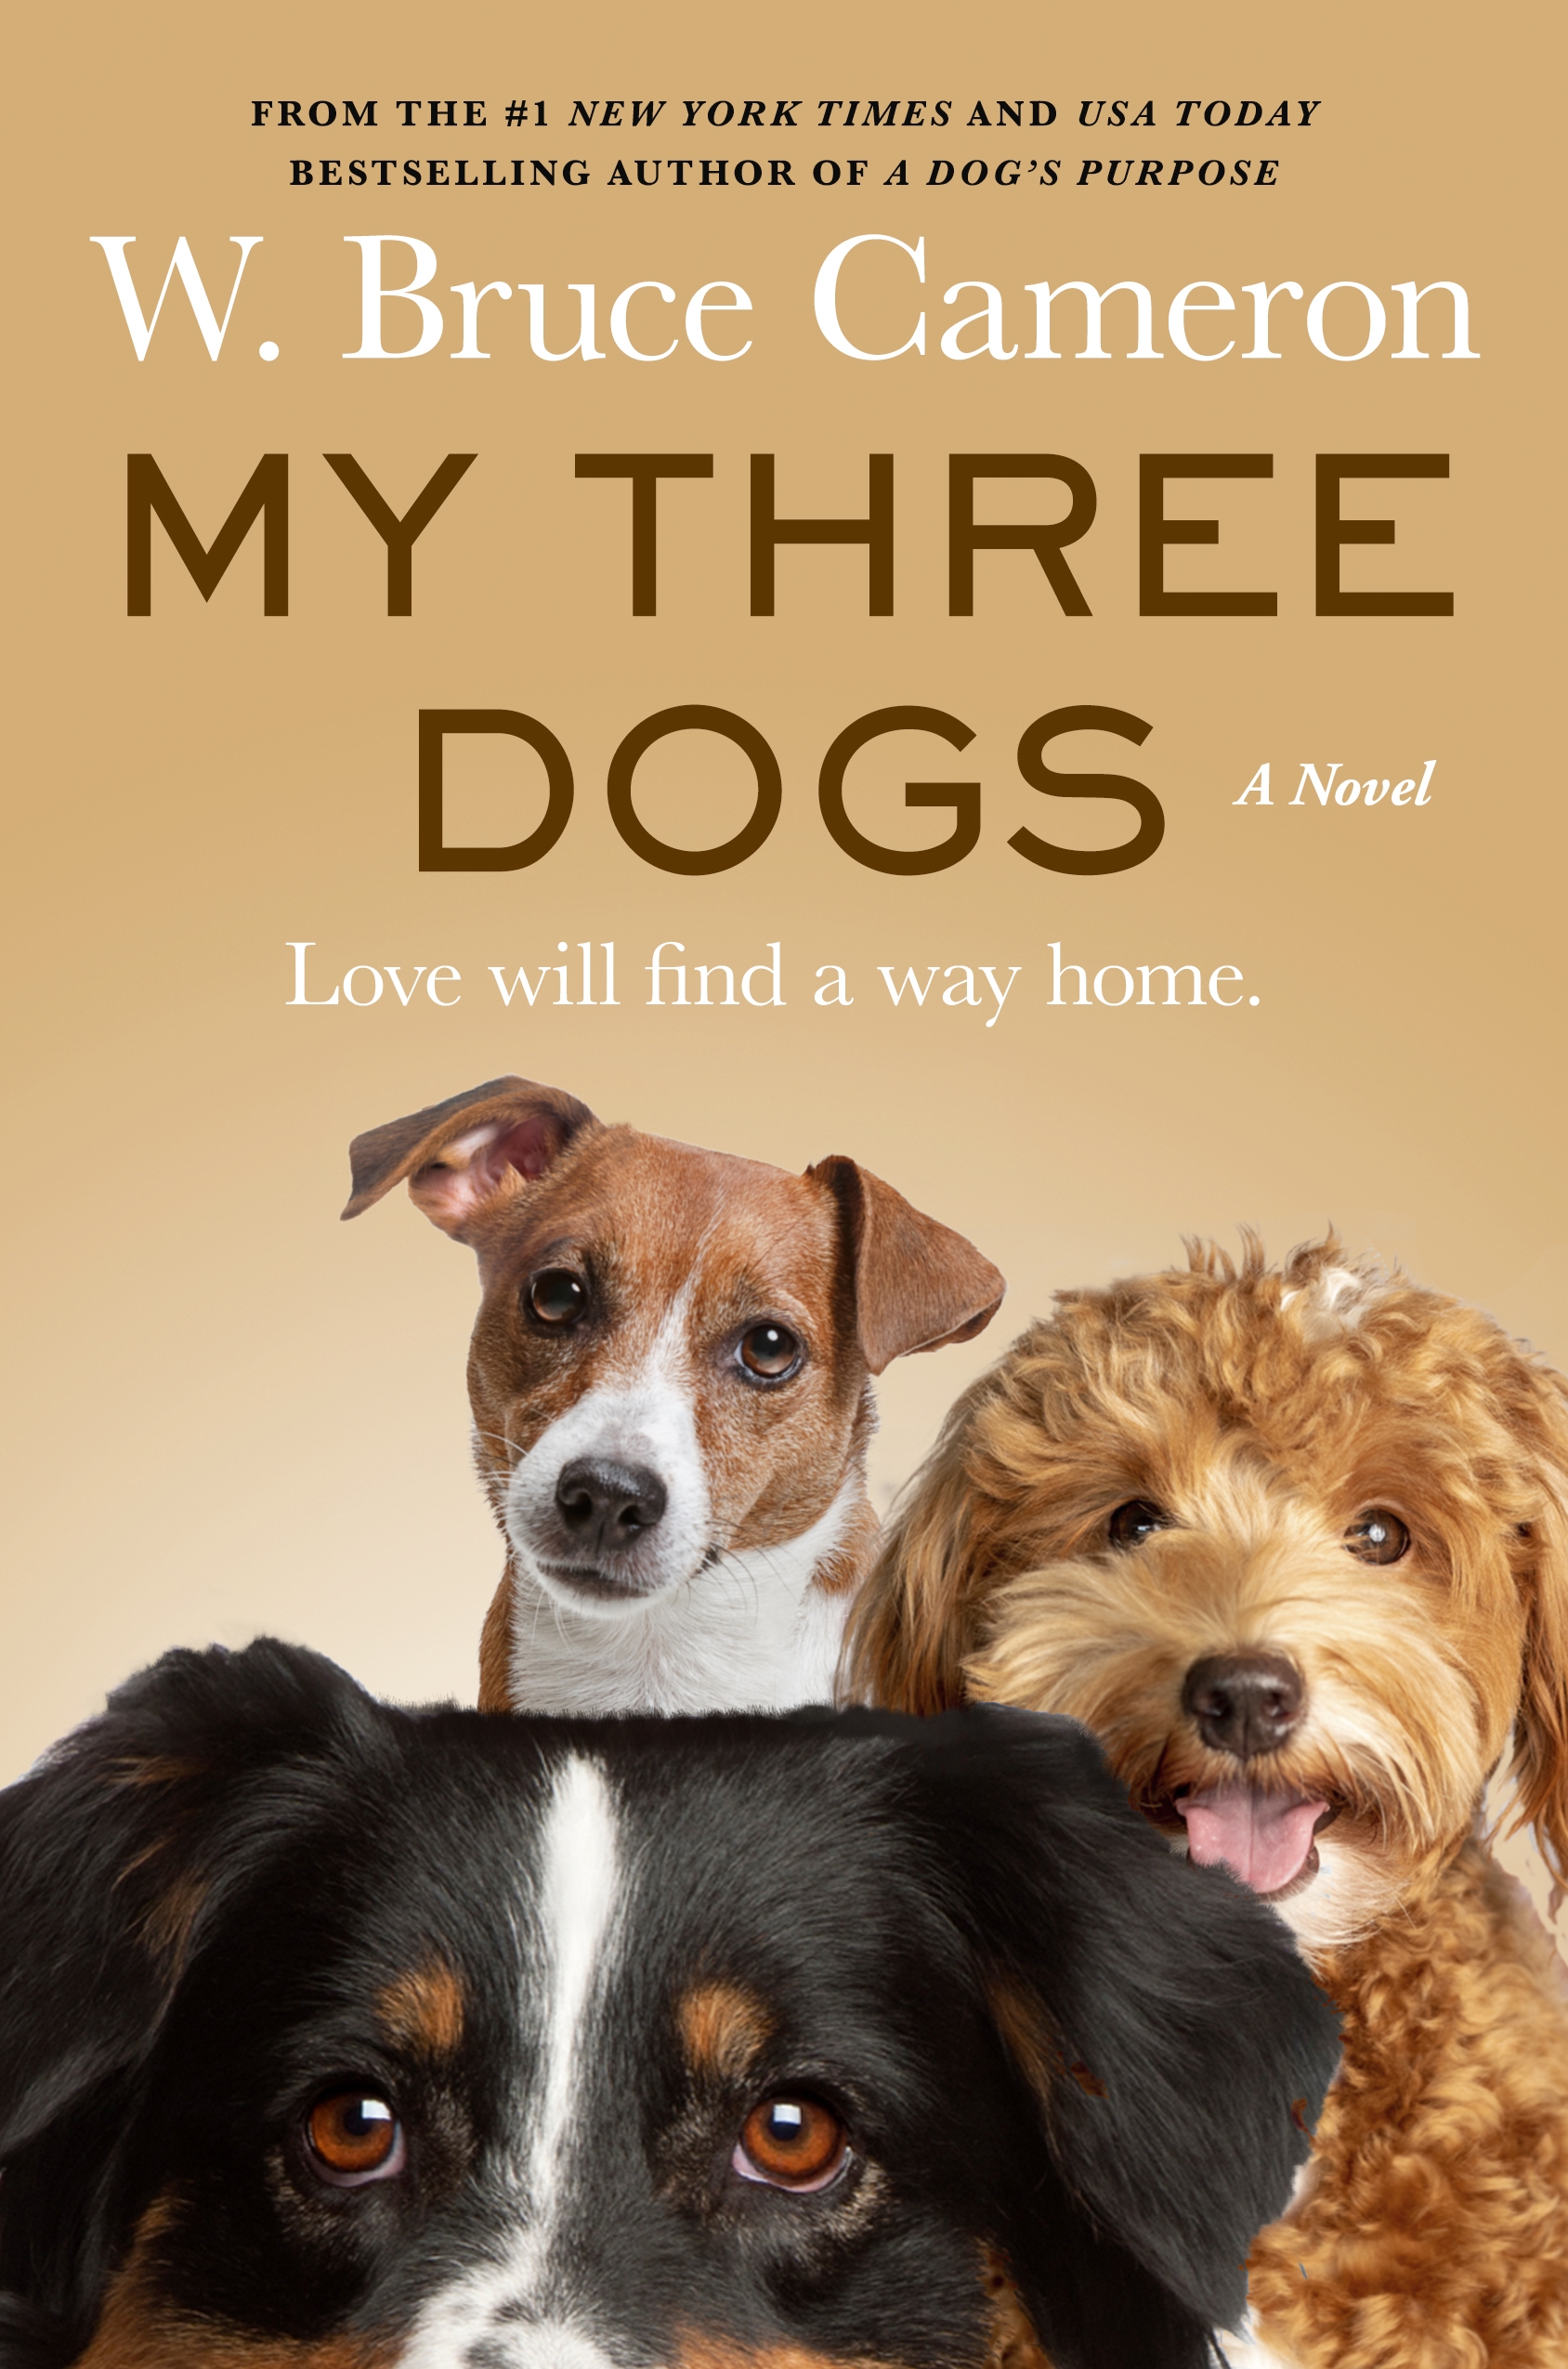 My Three Dogs by W. Bruce Cameron